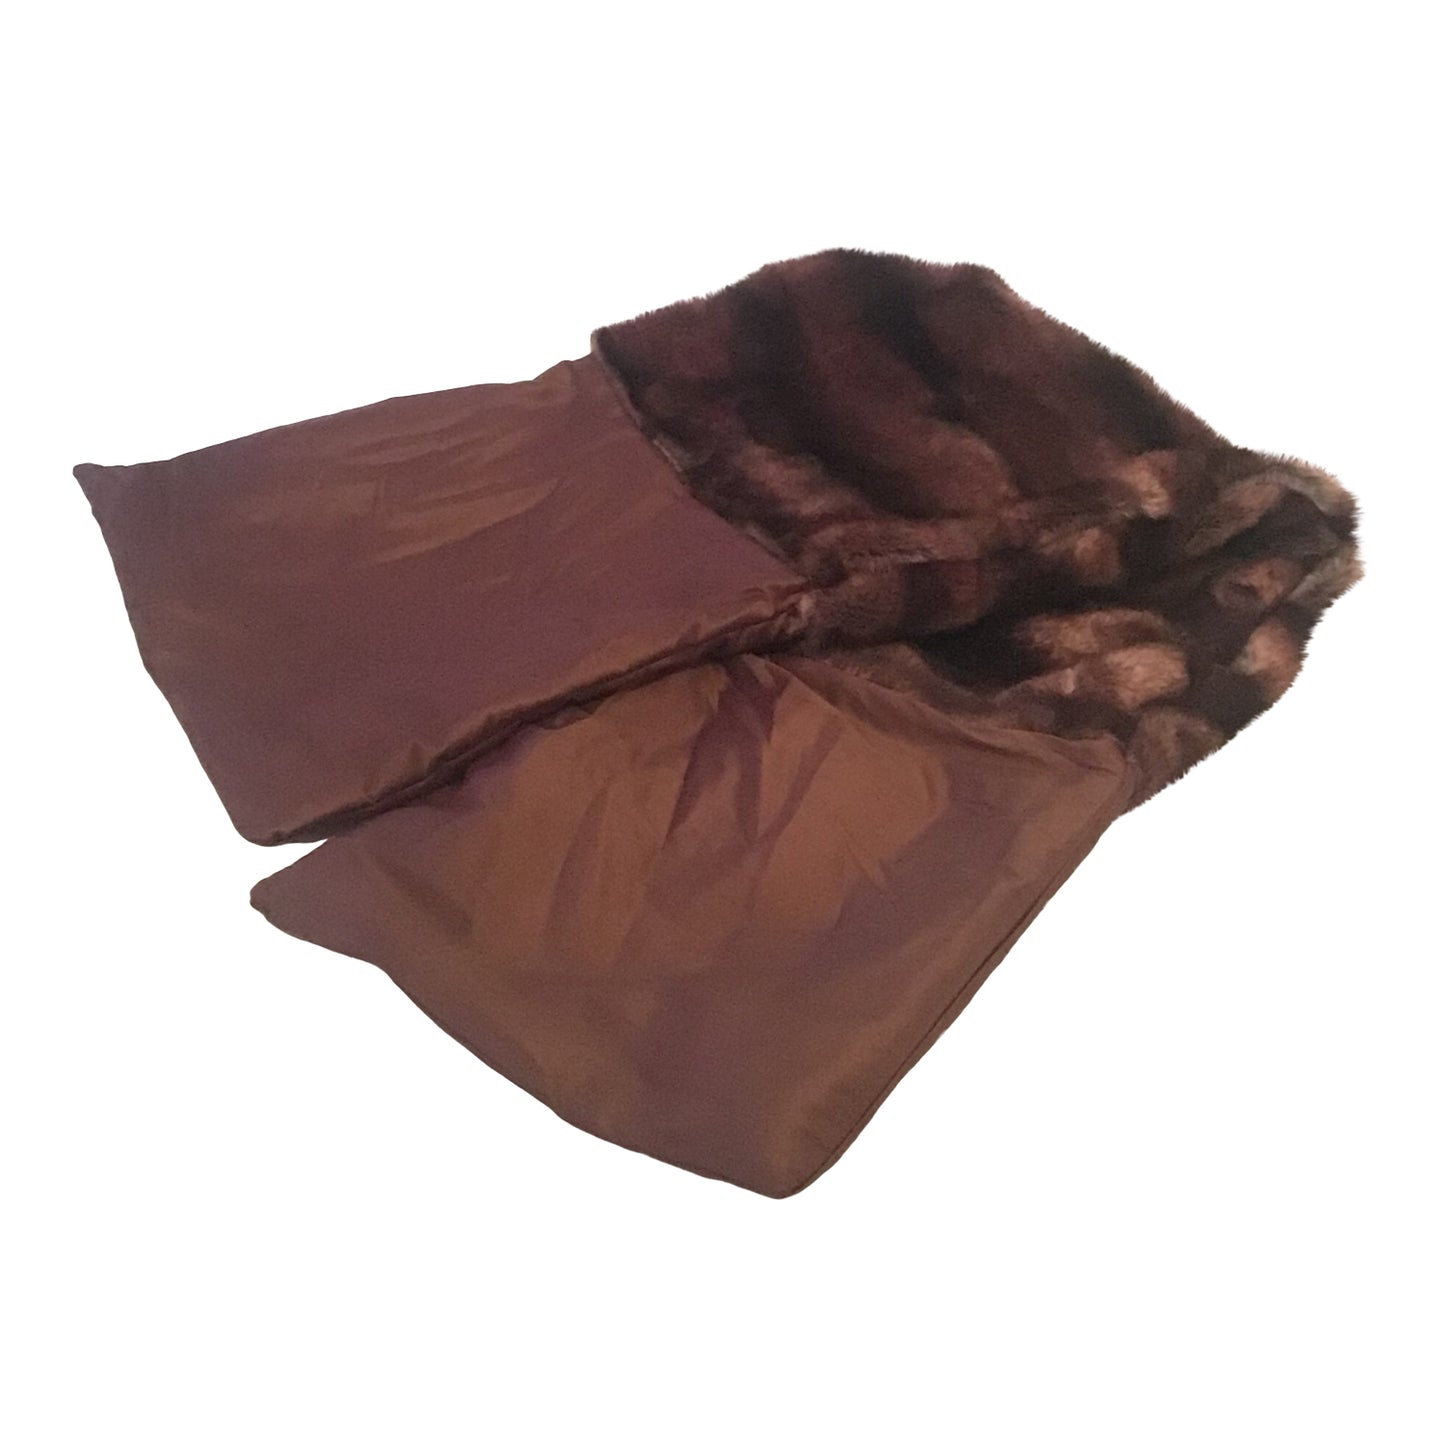 Faux Fur and Silk shantung Twisturban in cherry chocolate